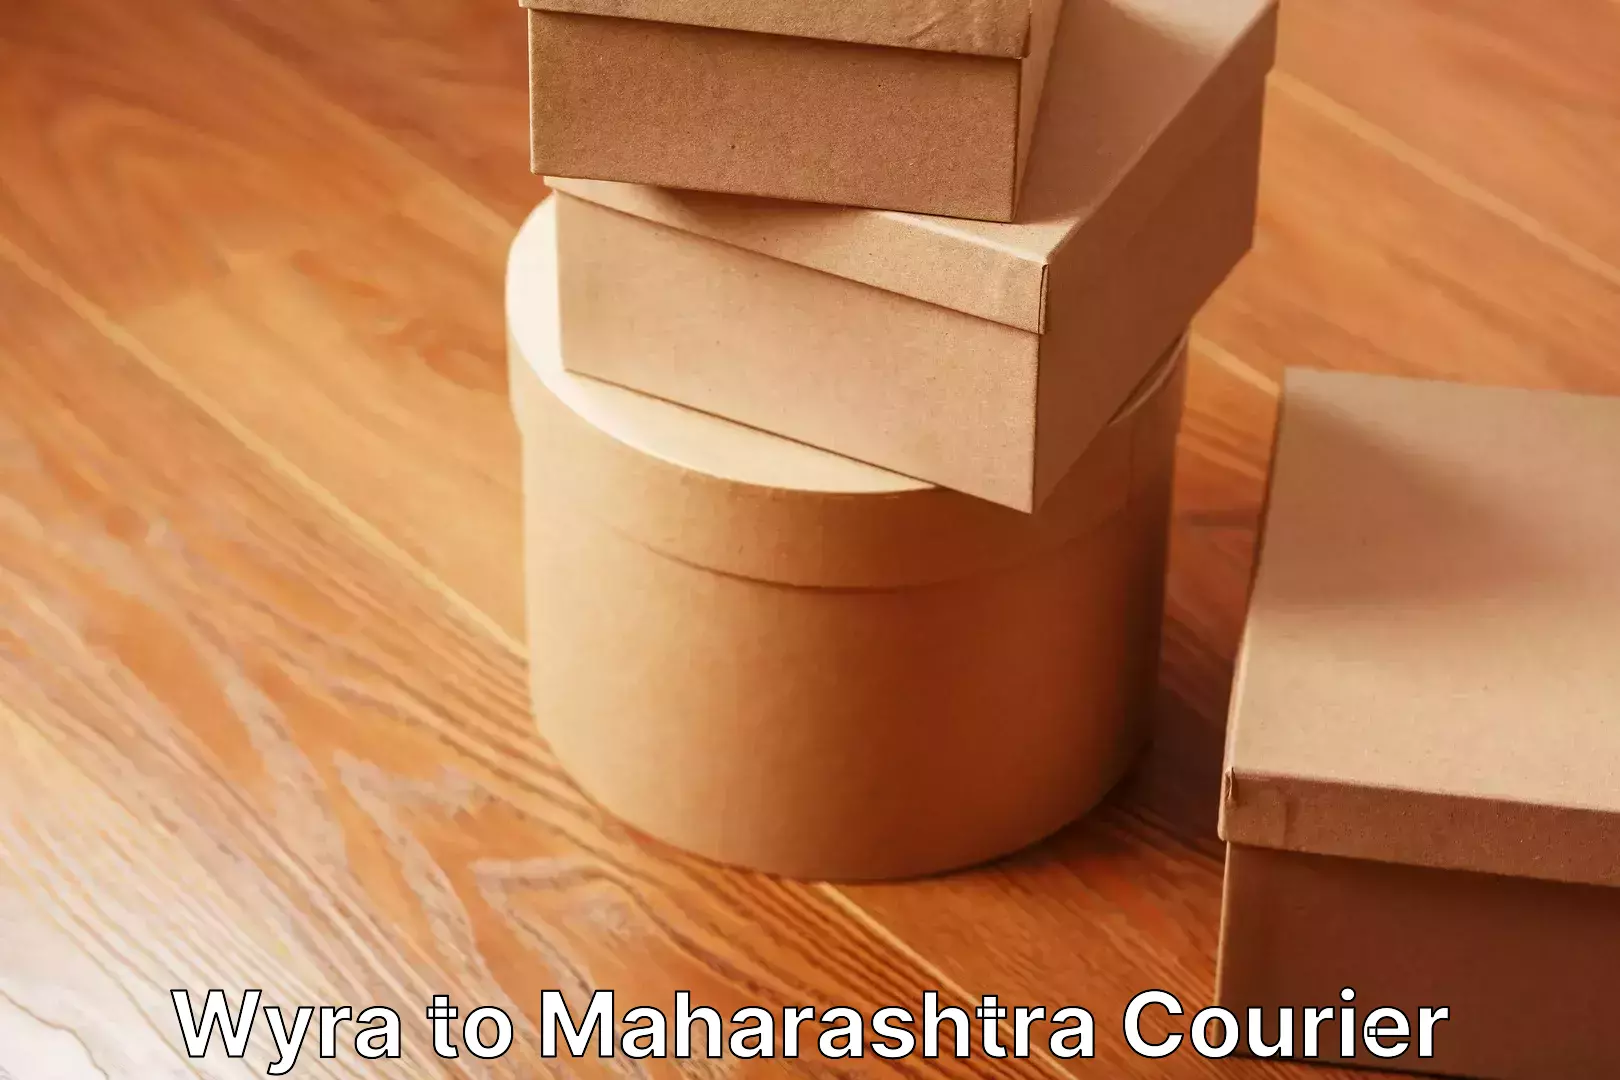 Professional furniture movers Wyra to Maharashtra